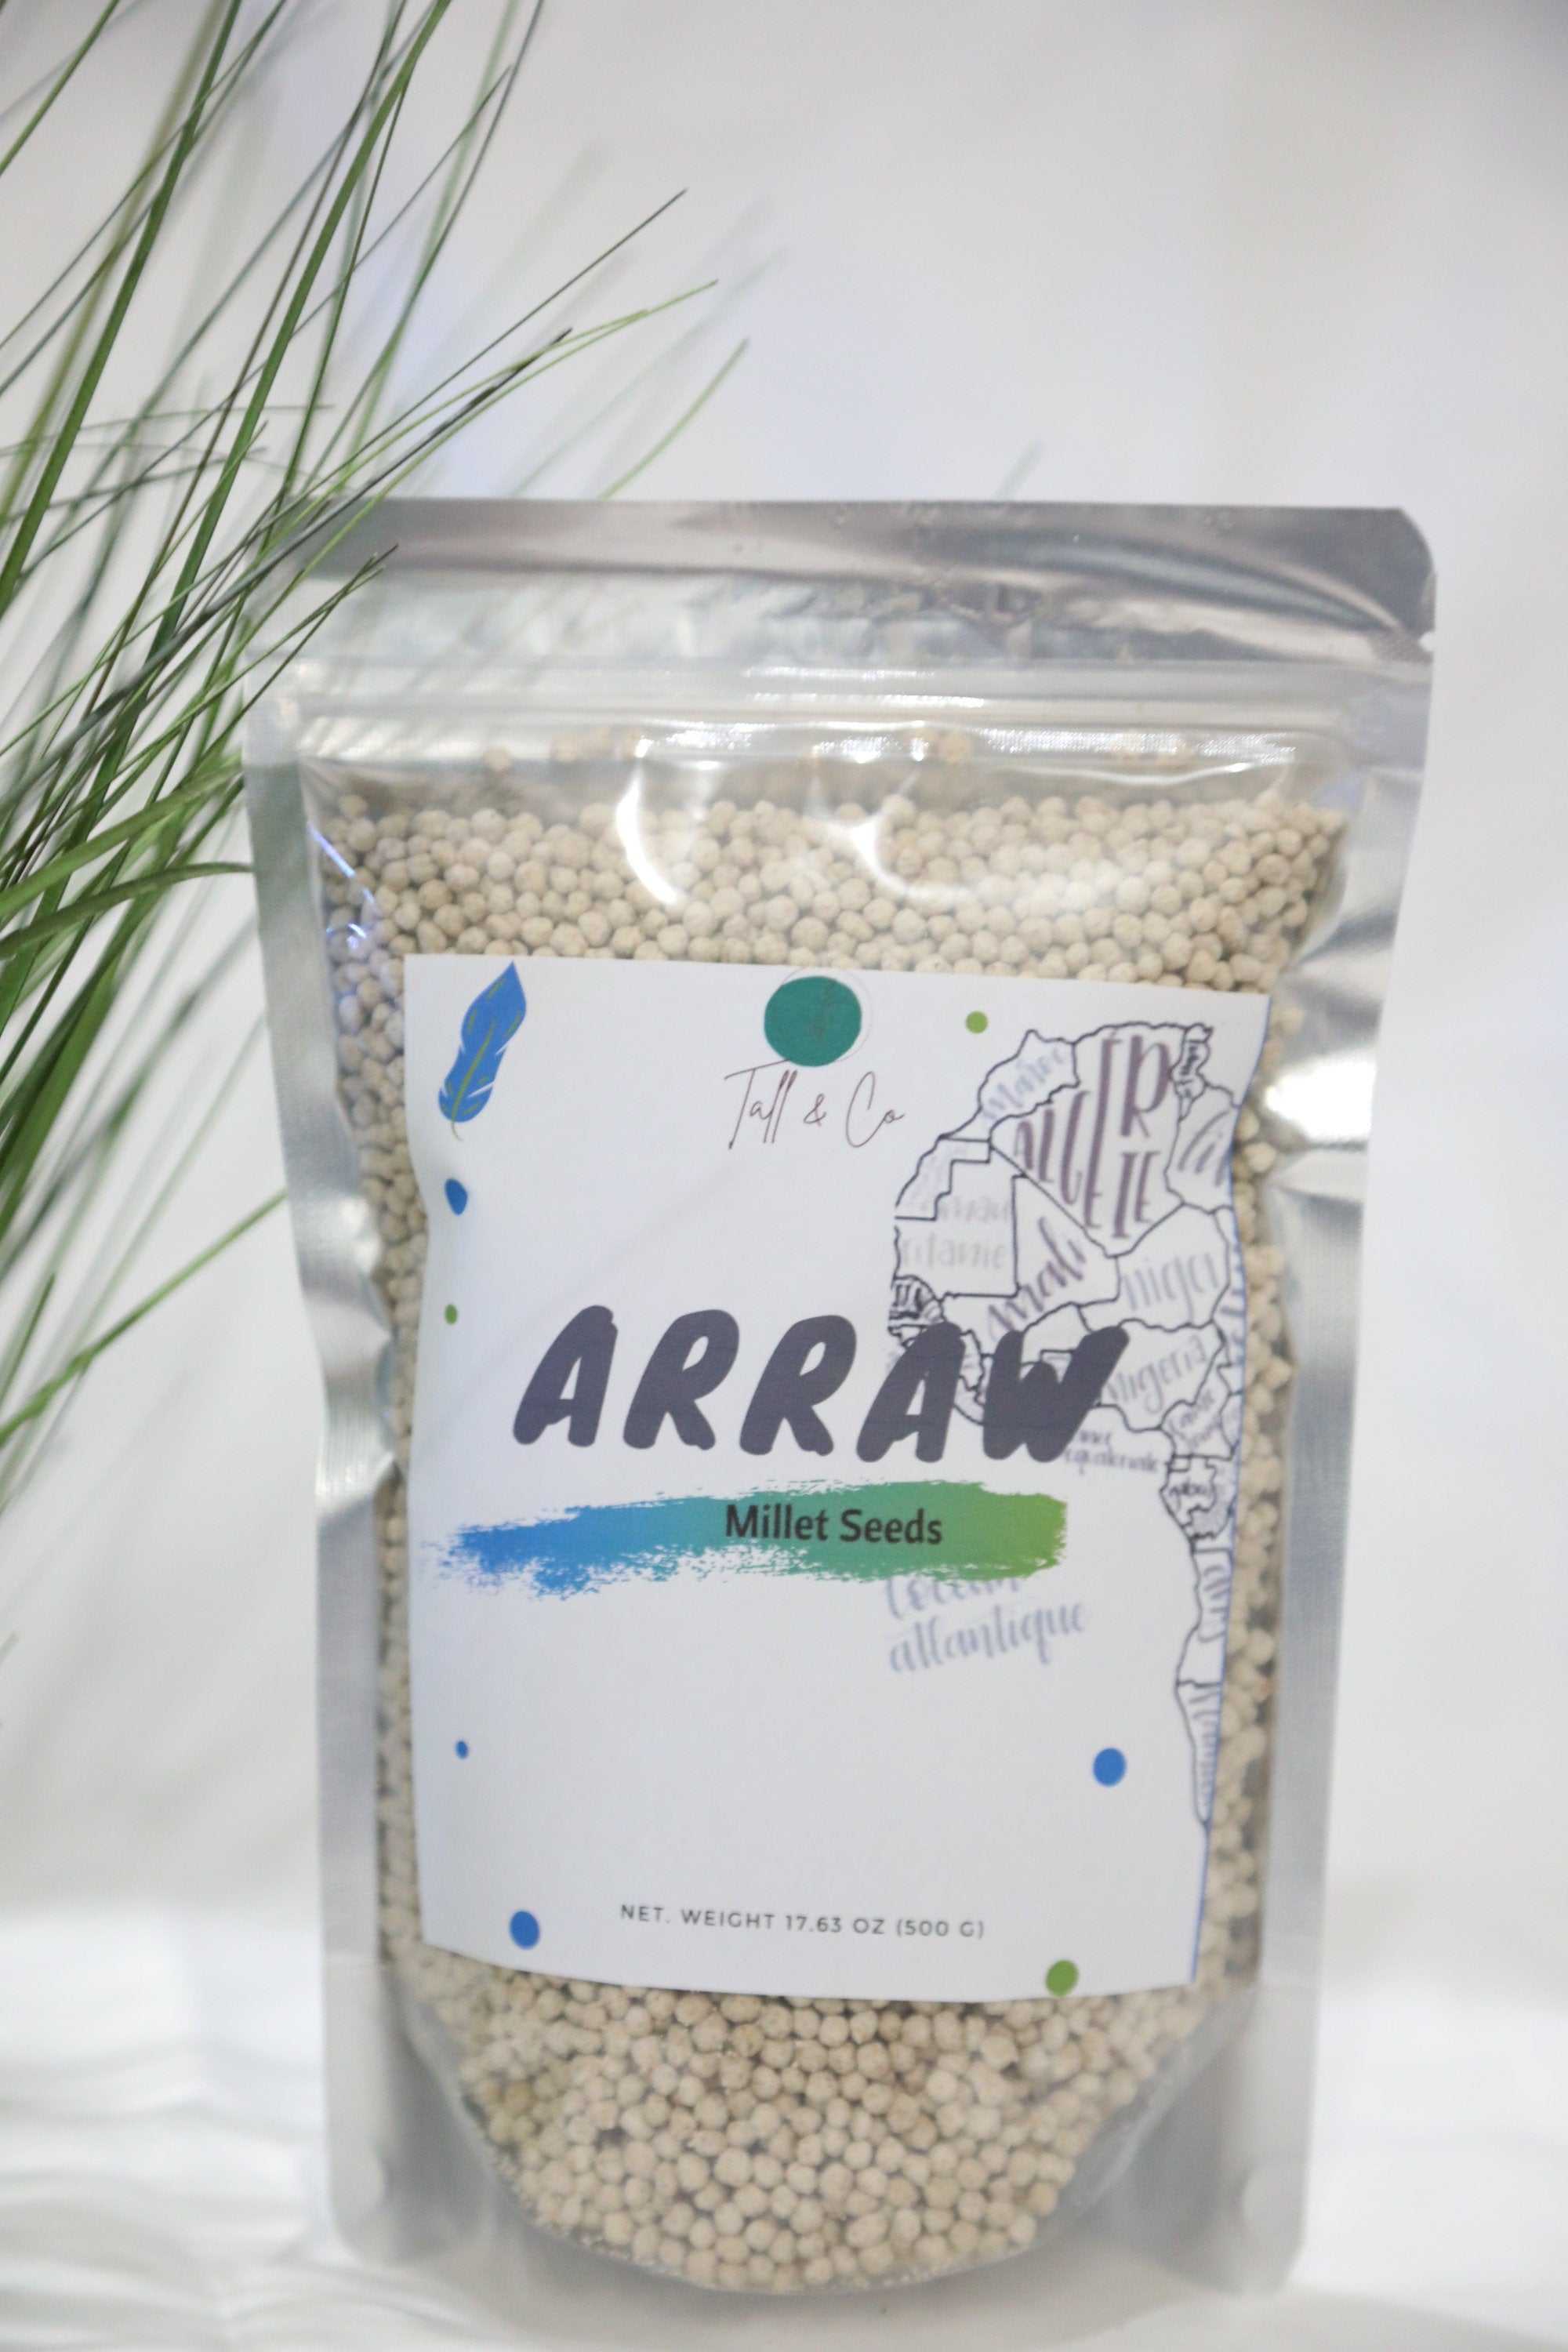 Arraw/ Millet seeds 500g